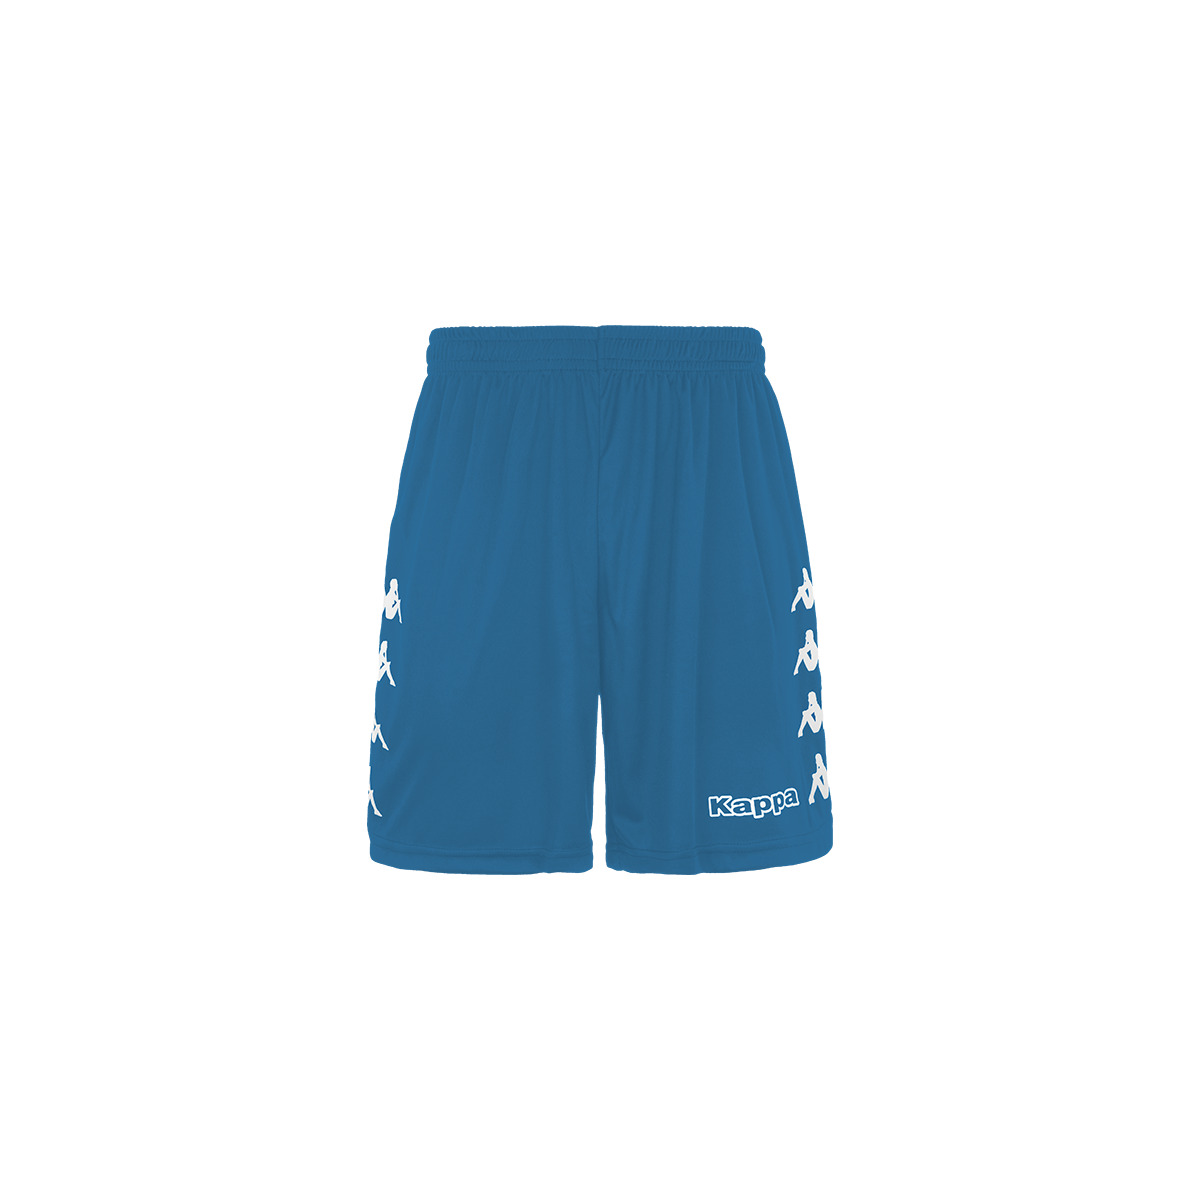 Pantalón corto deporte niño bermudas Deportivo de la Coruña azul